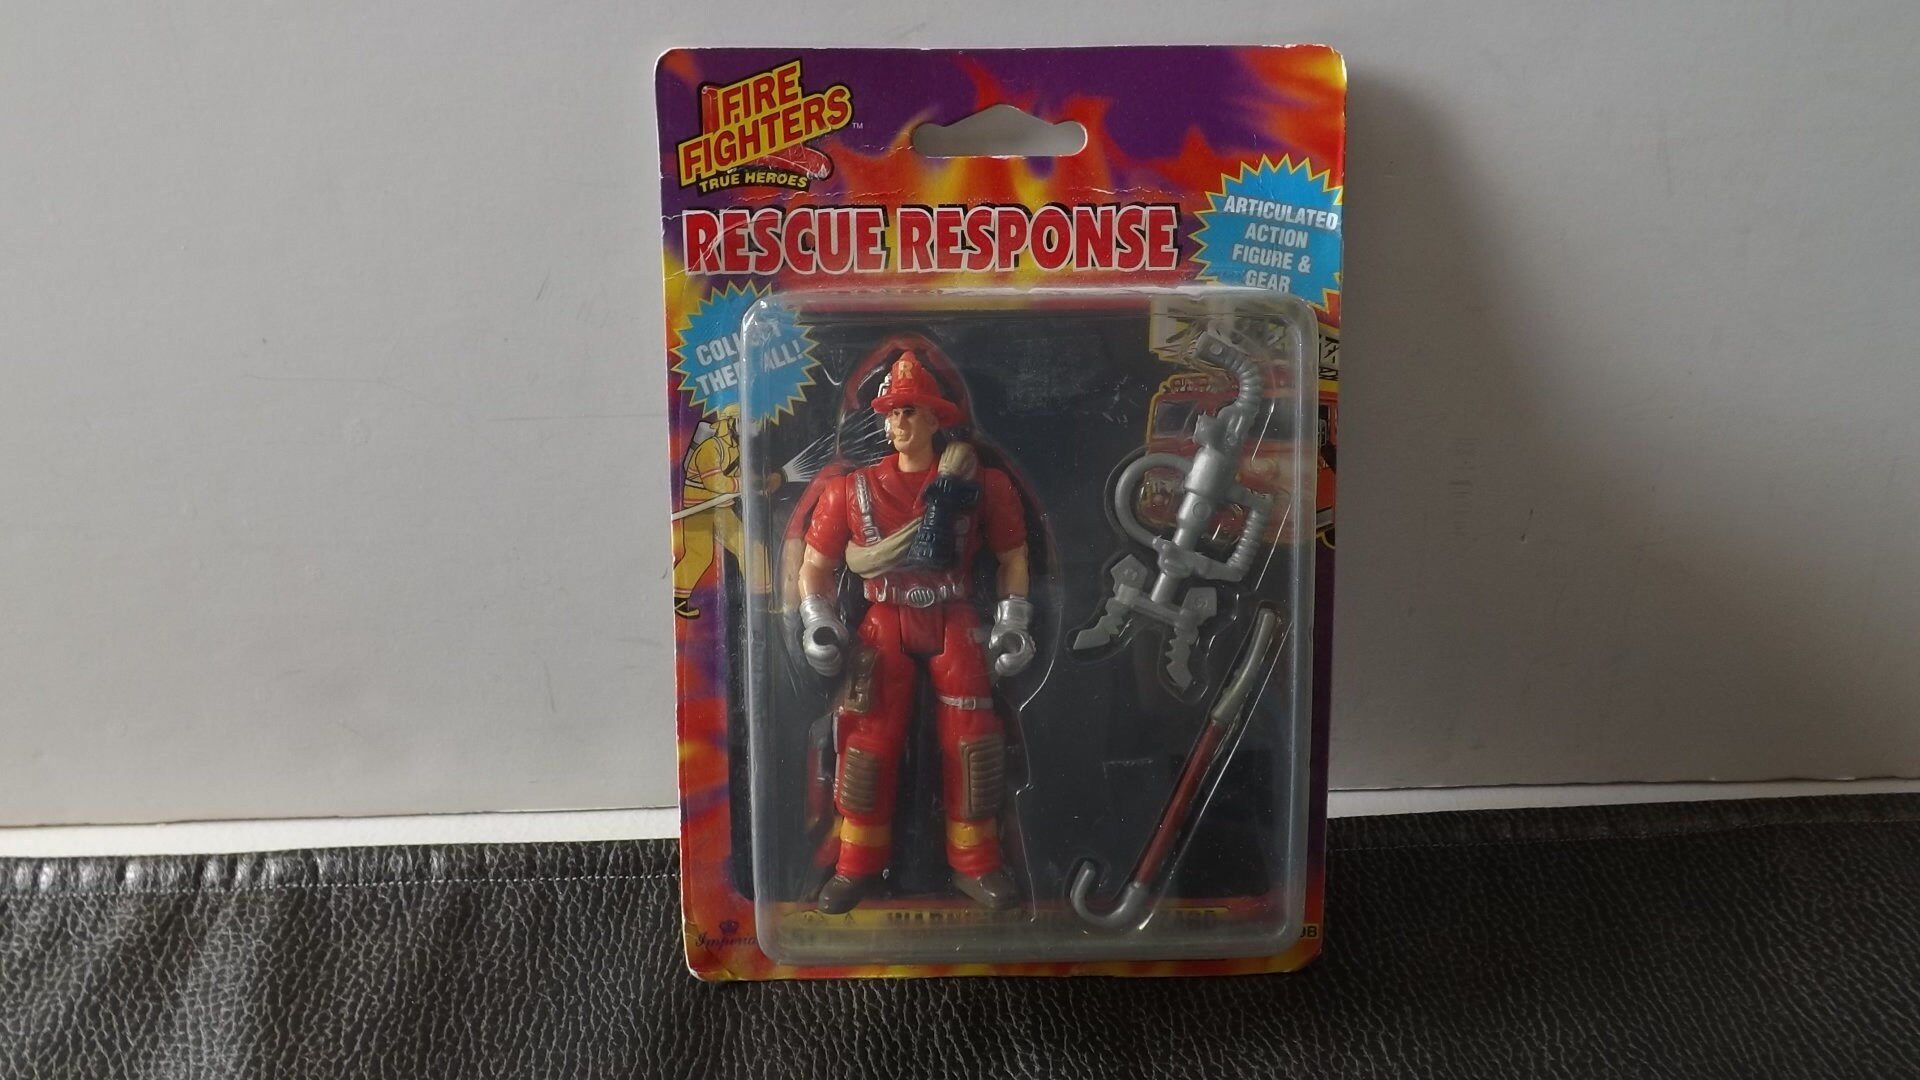 The Smurfs Rescue Fireman Toy Island Mini Figure